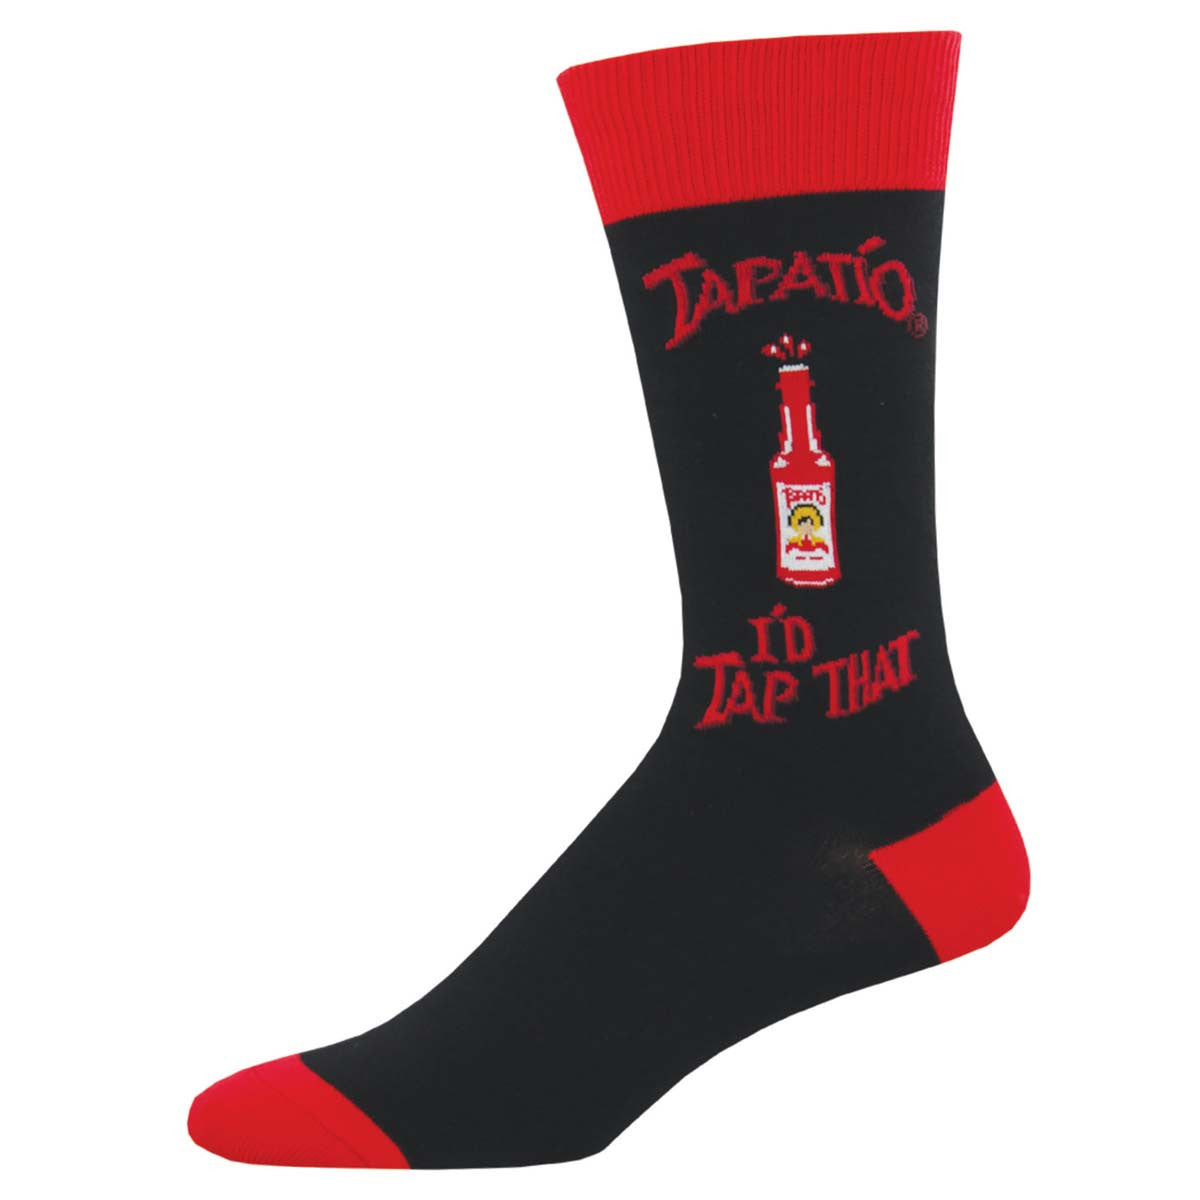 Tapatio Hot Sauce 'I'd Tap That' Mens Socks